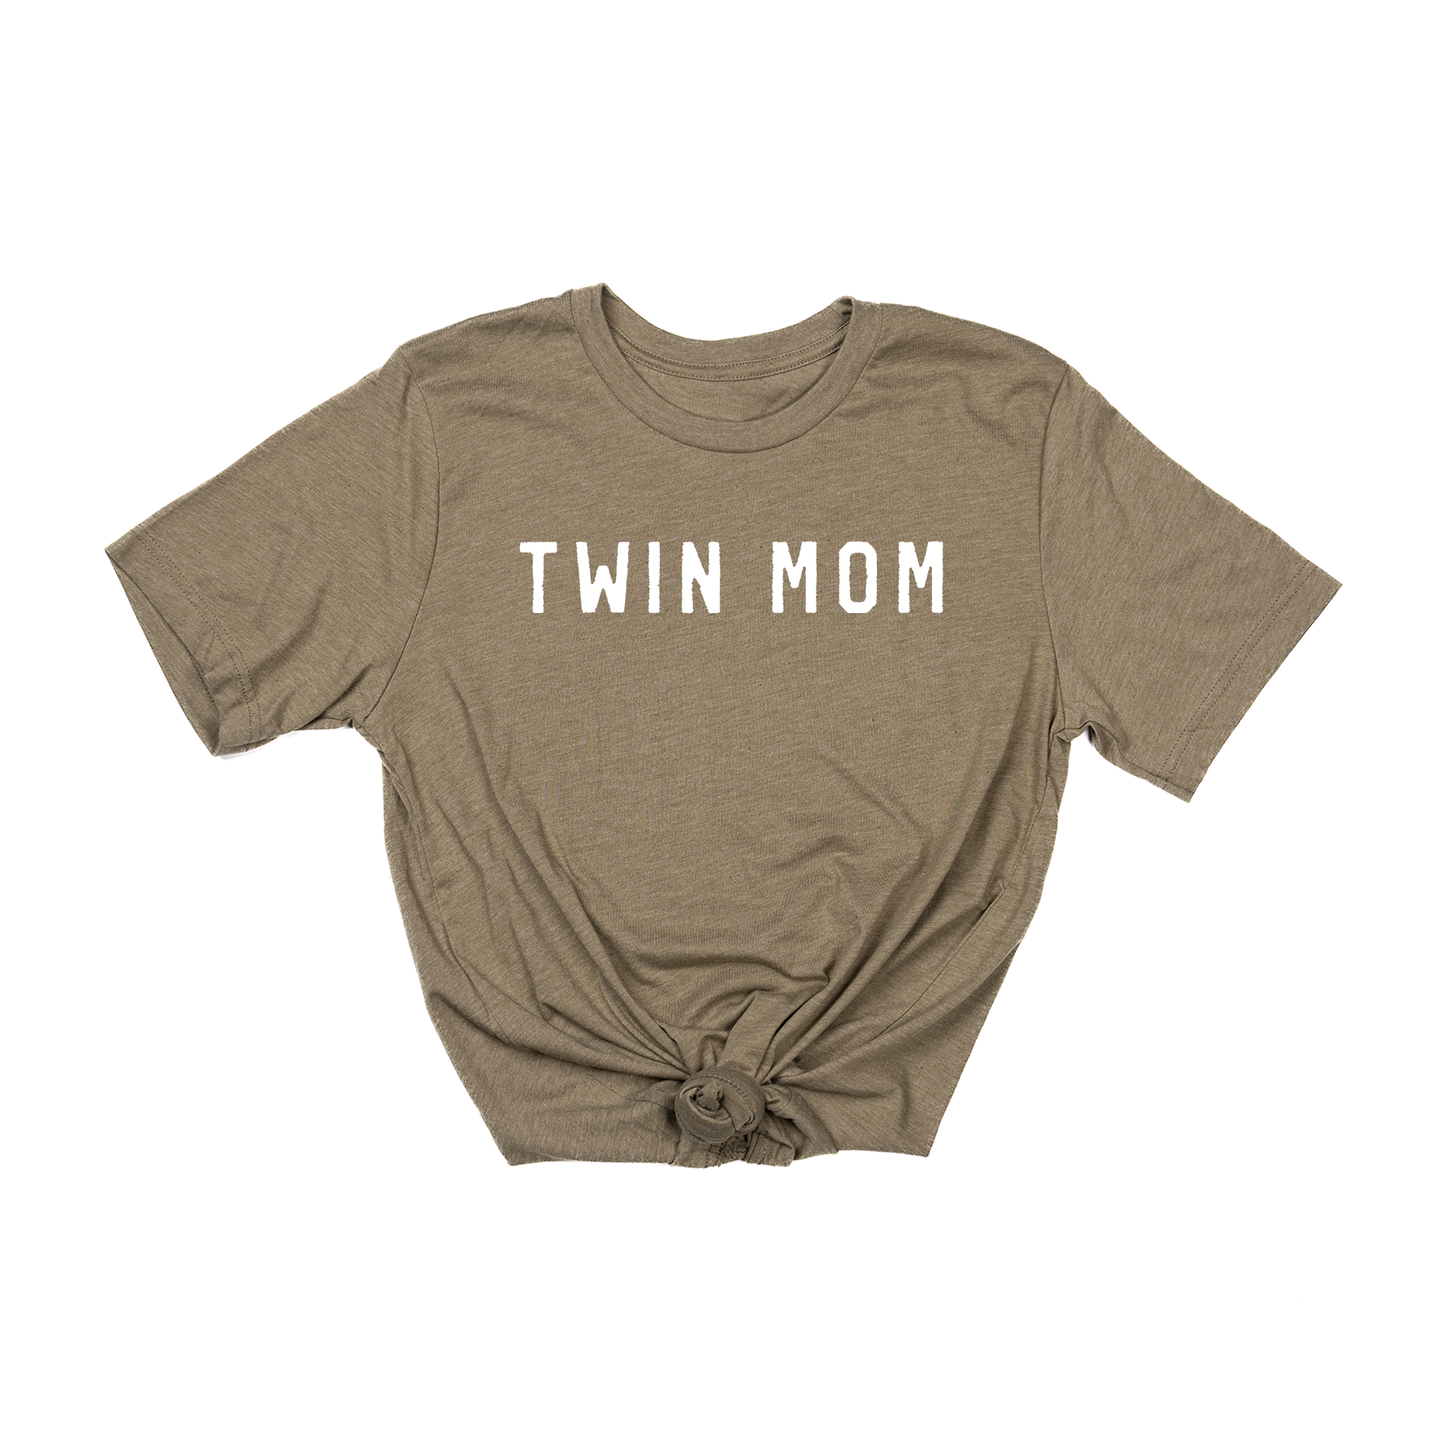 Twin Mom (White) - Tee (Olive)